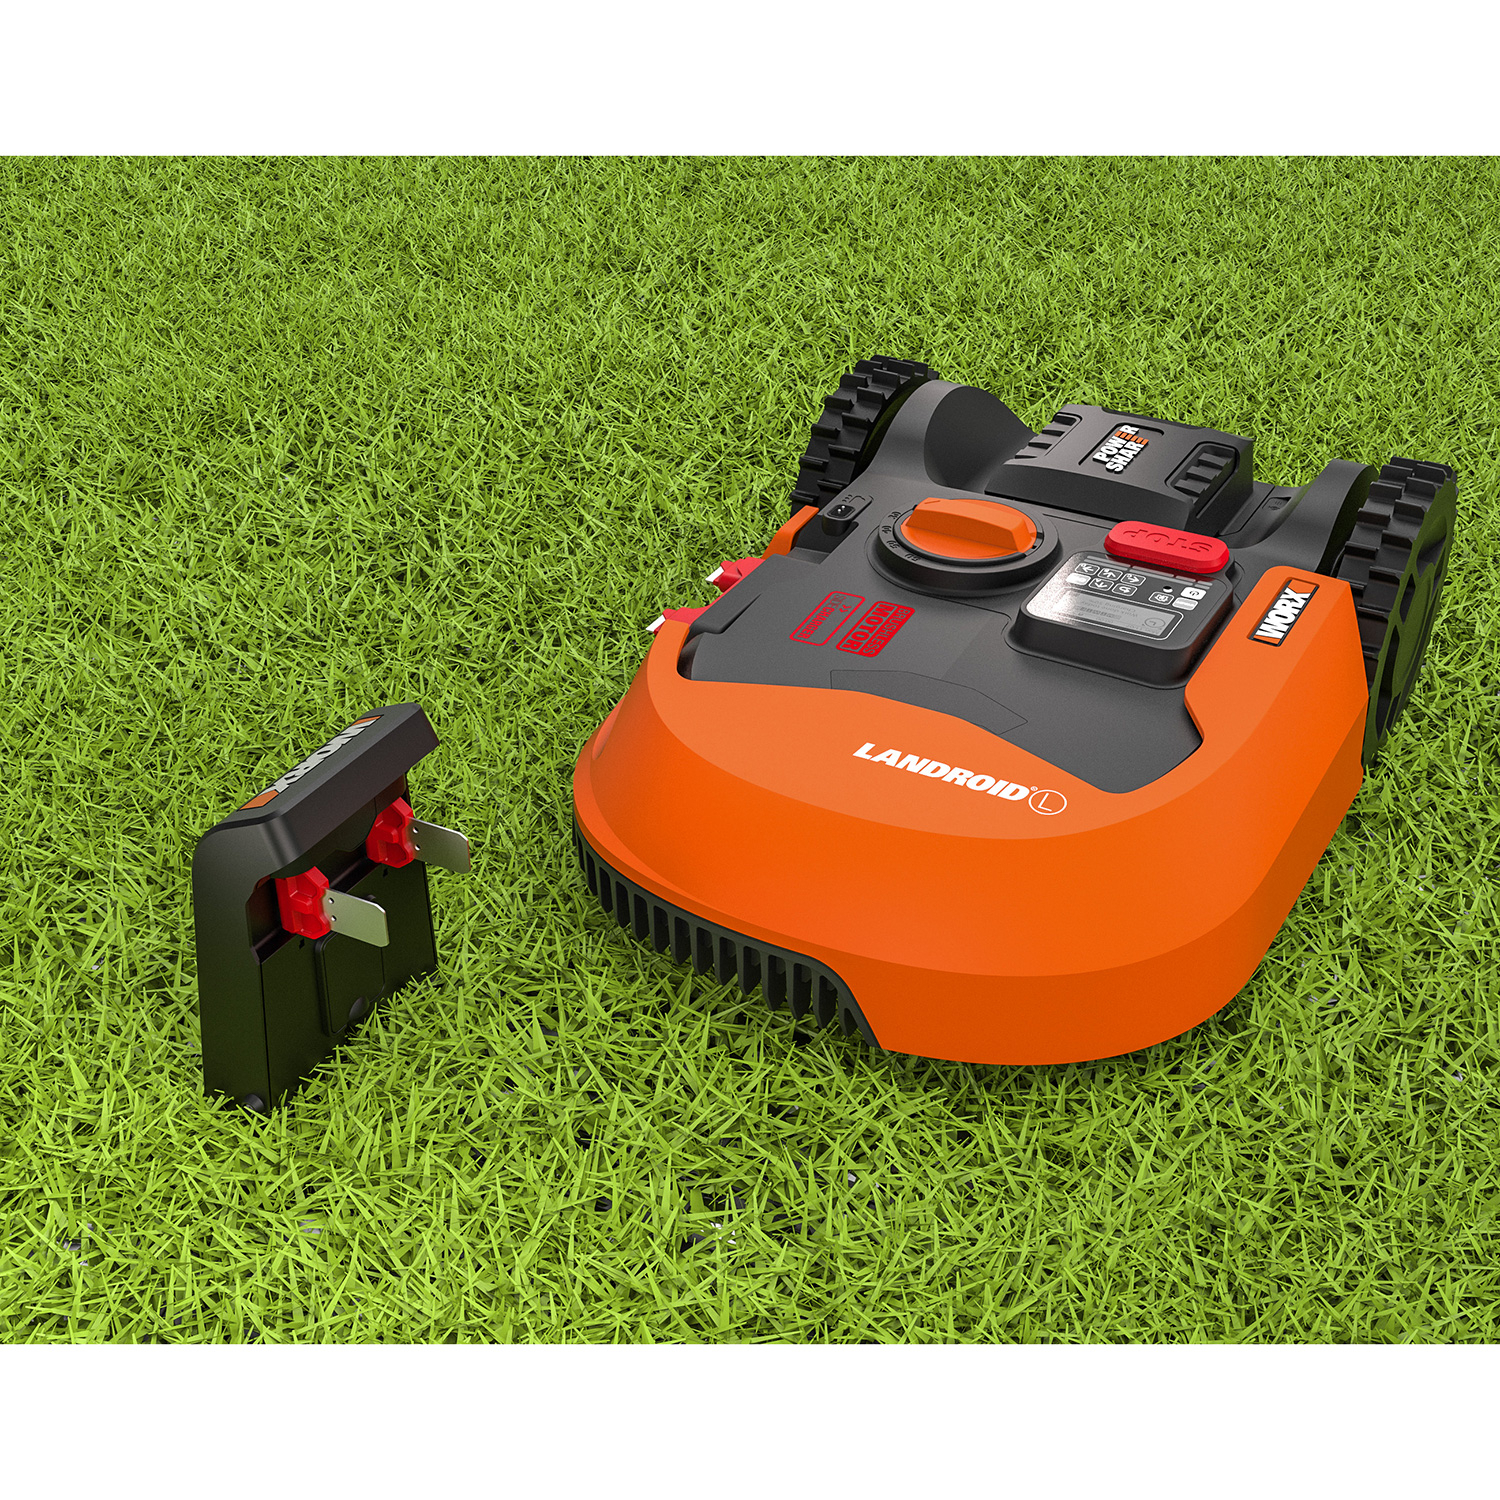 WORX 20V Landroid Robotic Lawn Mower 1500m2, App, Cut to Edge Technology